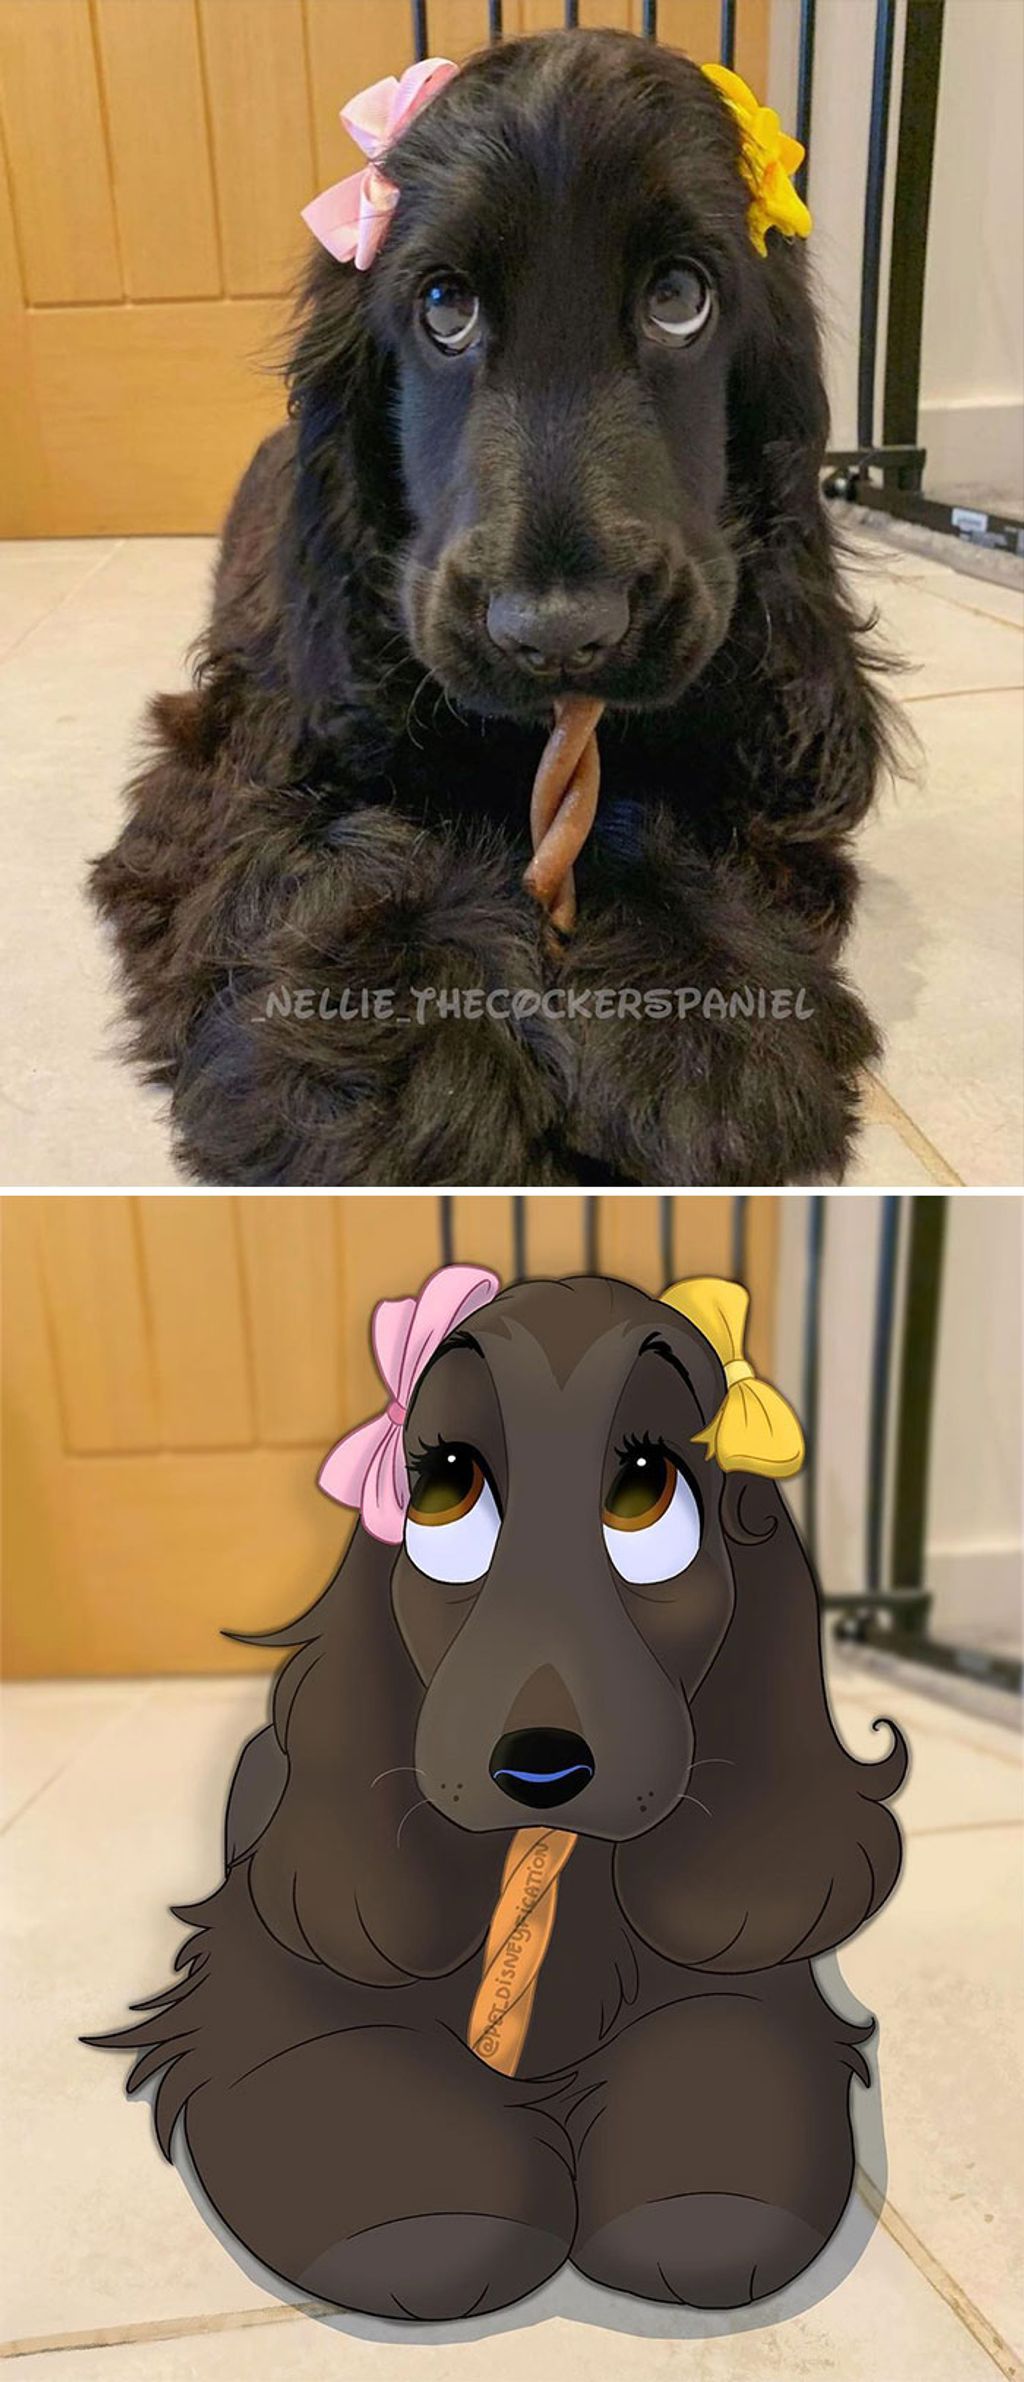 Forrás: Instagram/Pet Disneyfication, Boredpanda